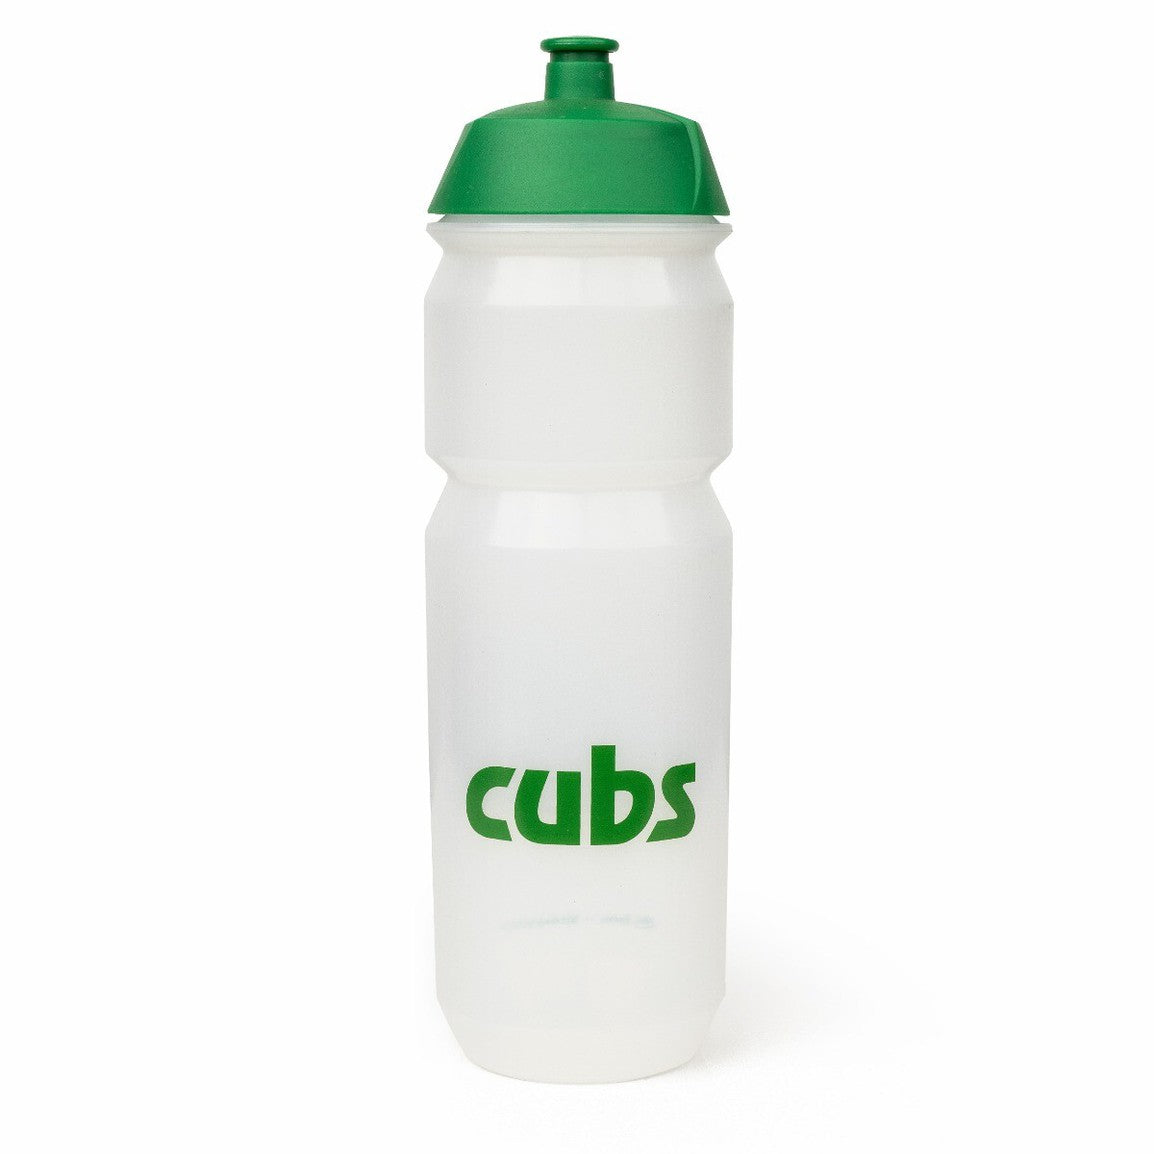 Cub Scouts Large Bio Sugarcane Bottle 750ml